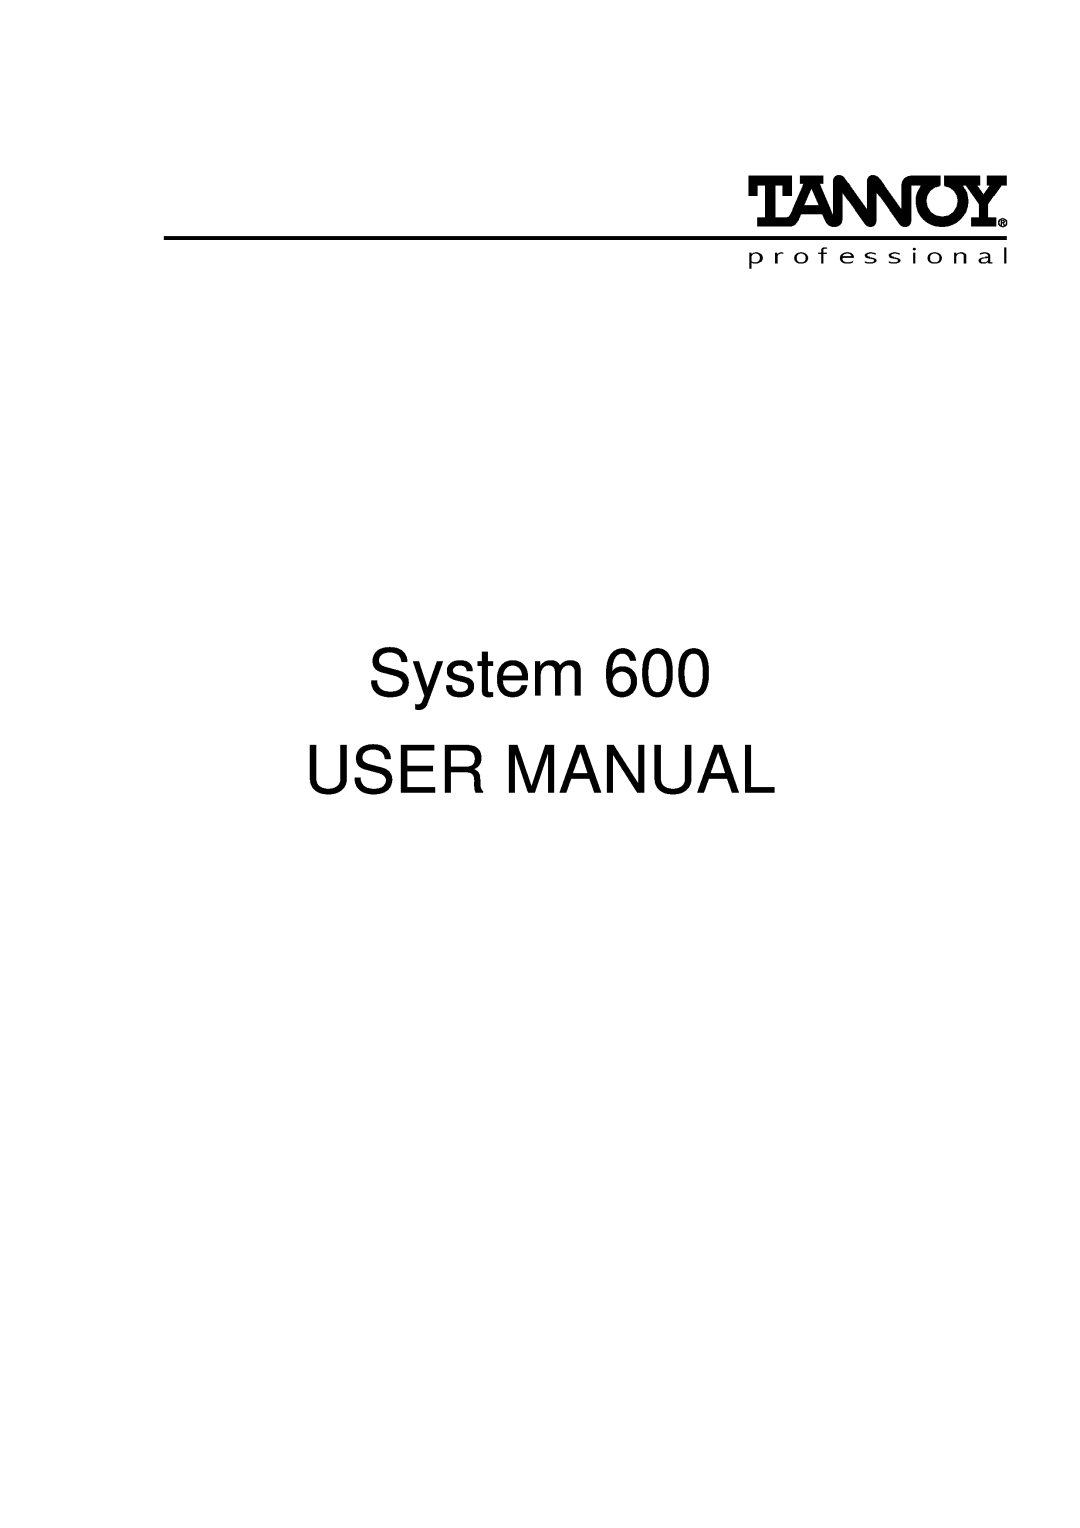 Tannoy 600 user manual 